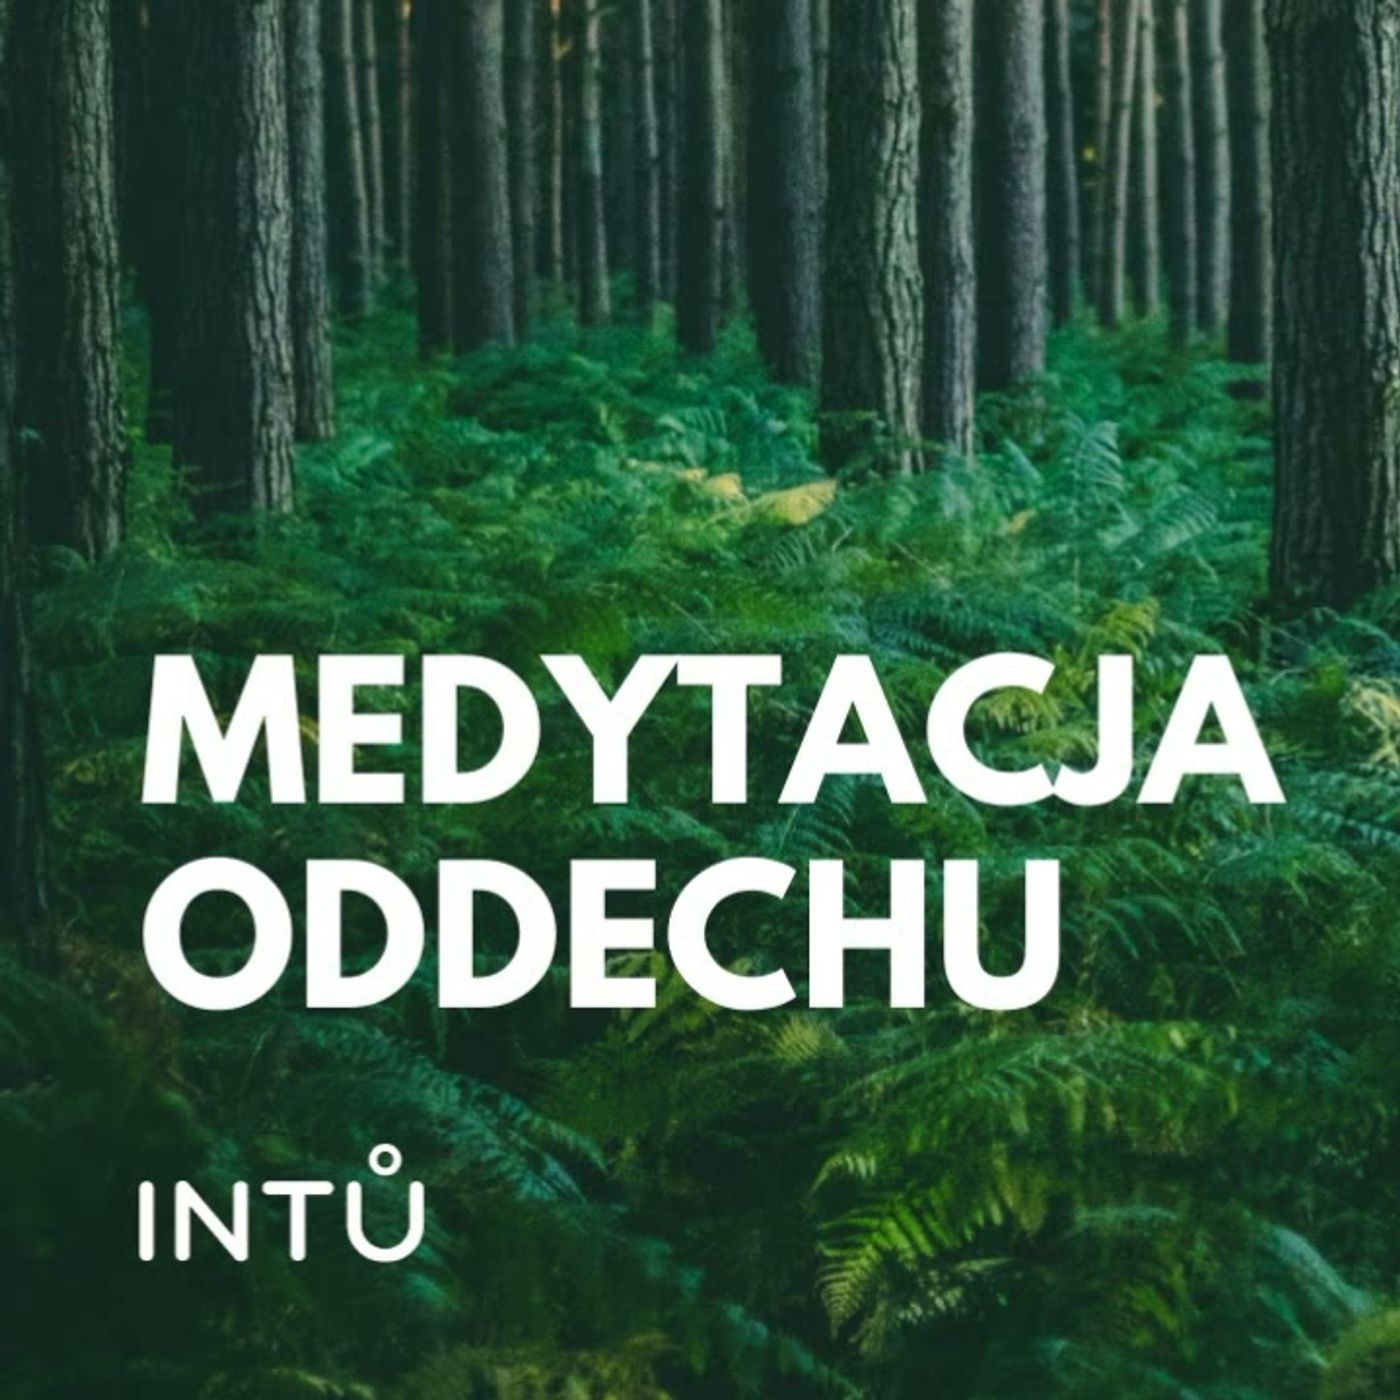 Medytacja oddechu - INTU